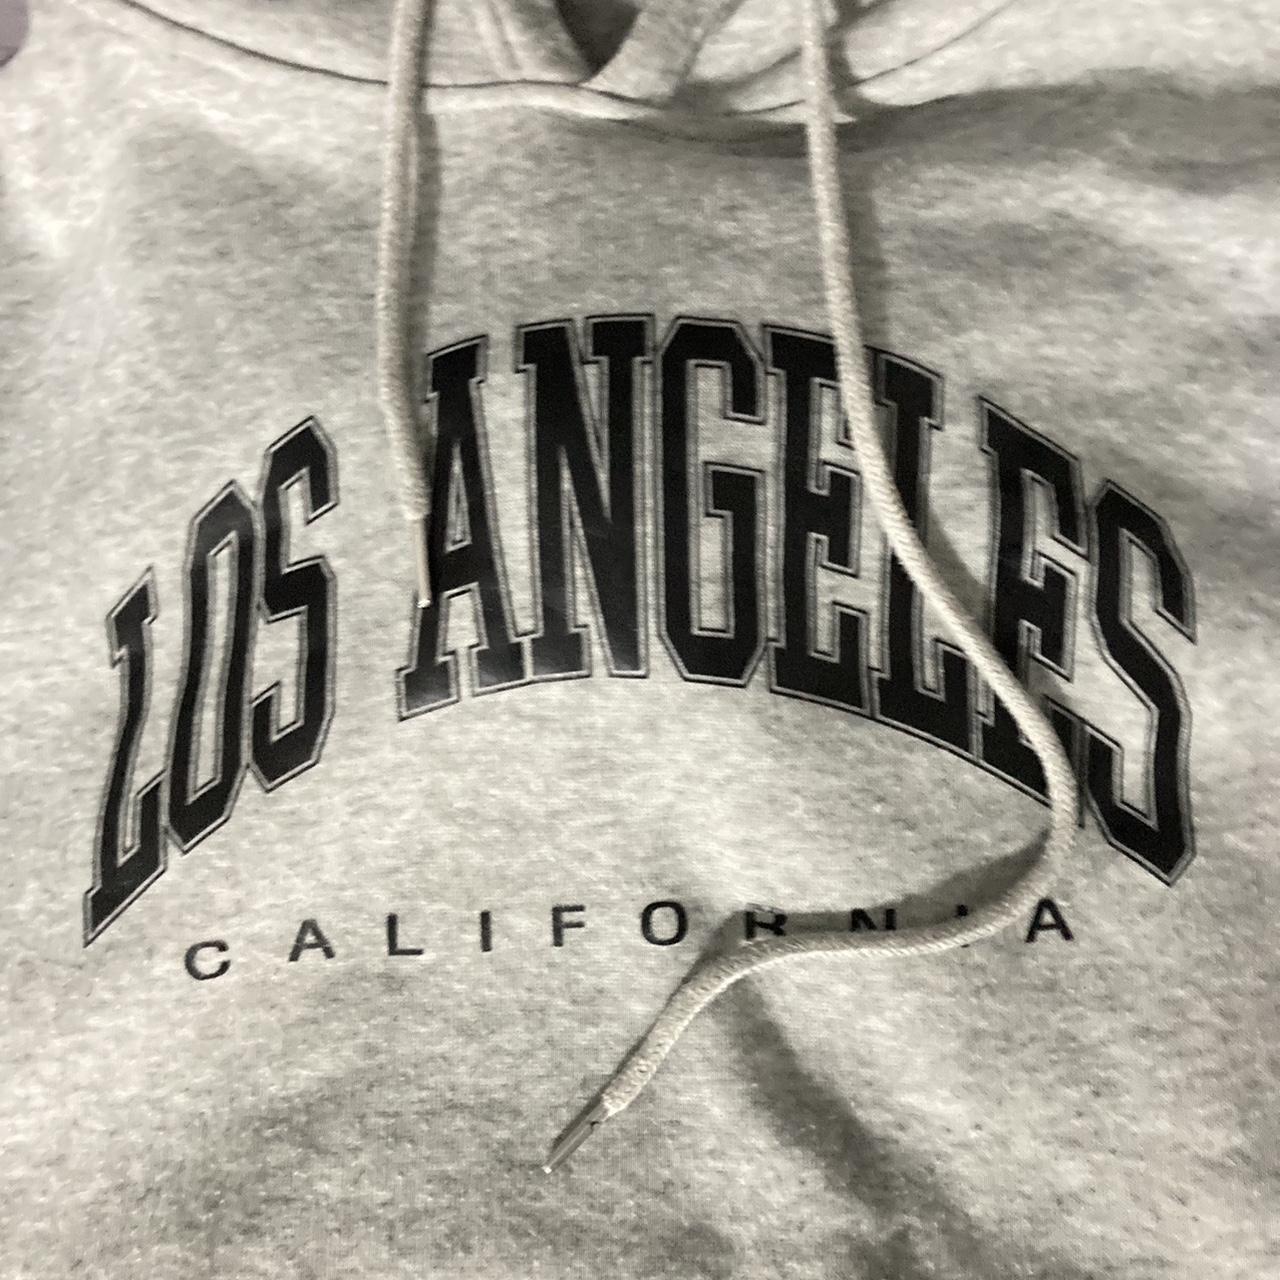 Los Angeles hoodie Free shipping on 2 items + free... - Depop